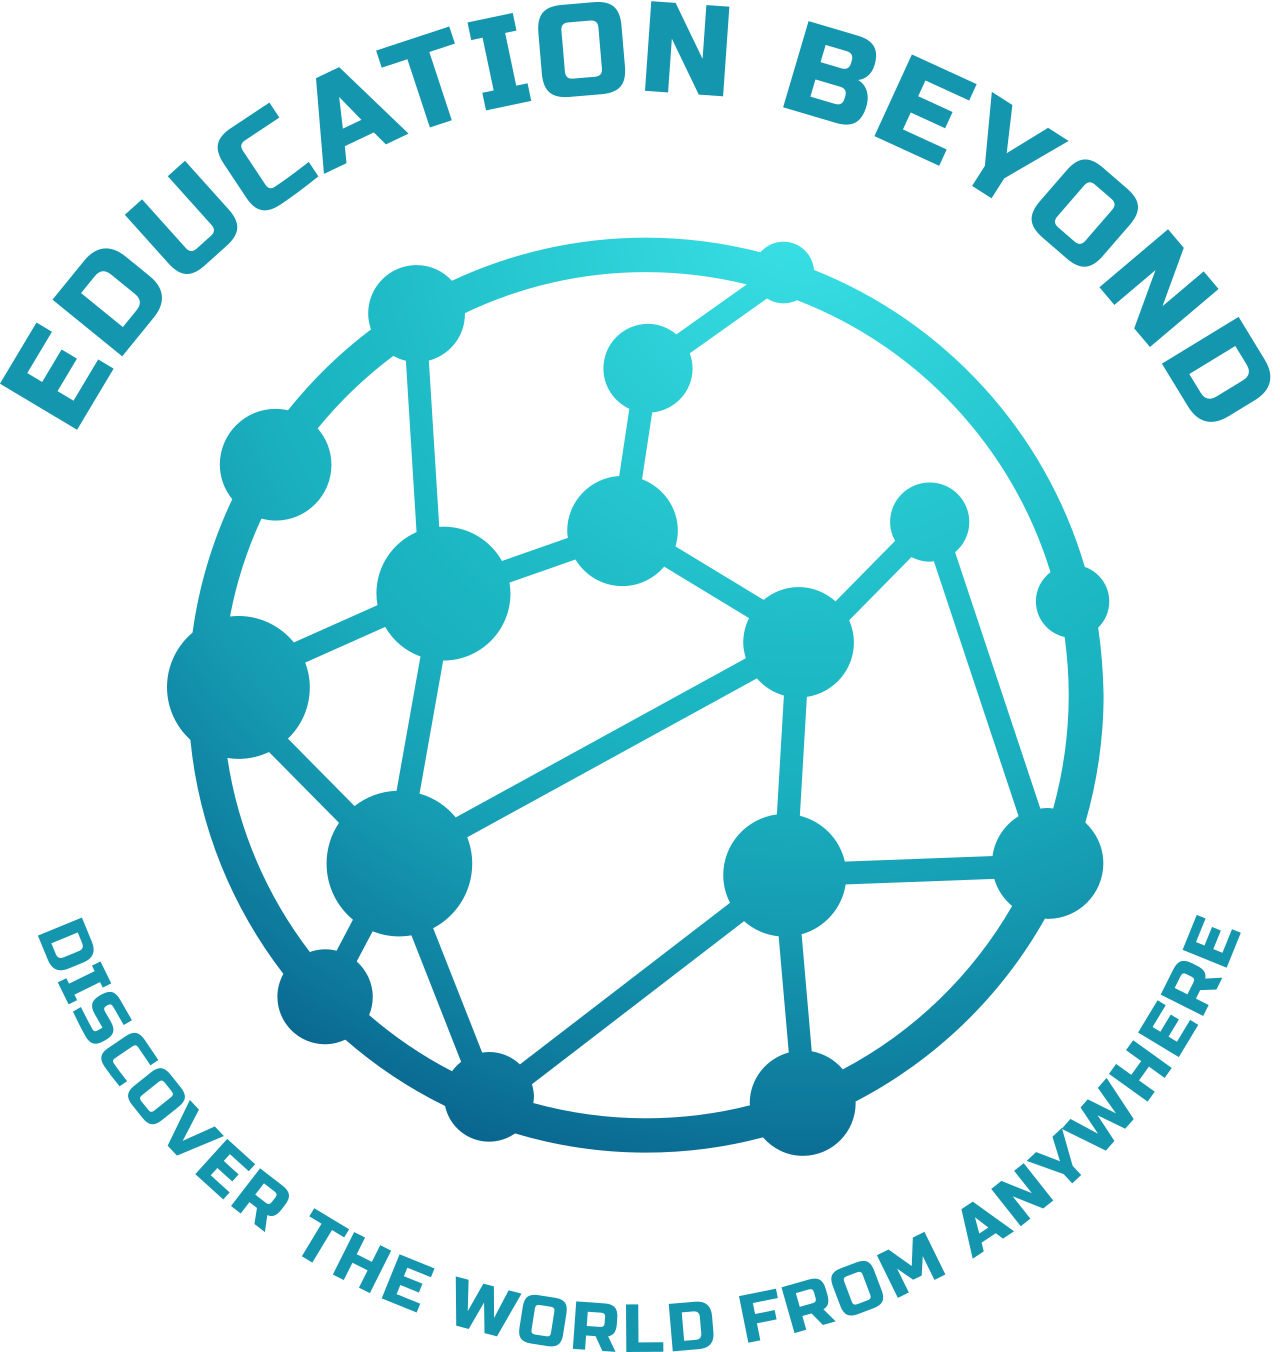 EDUCATION BEYOND's logo